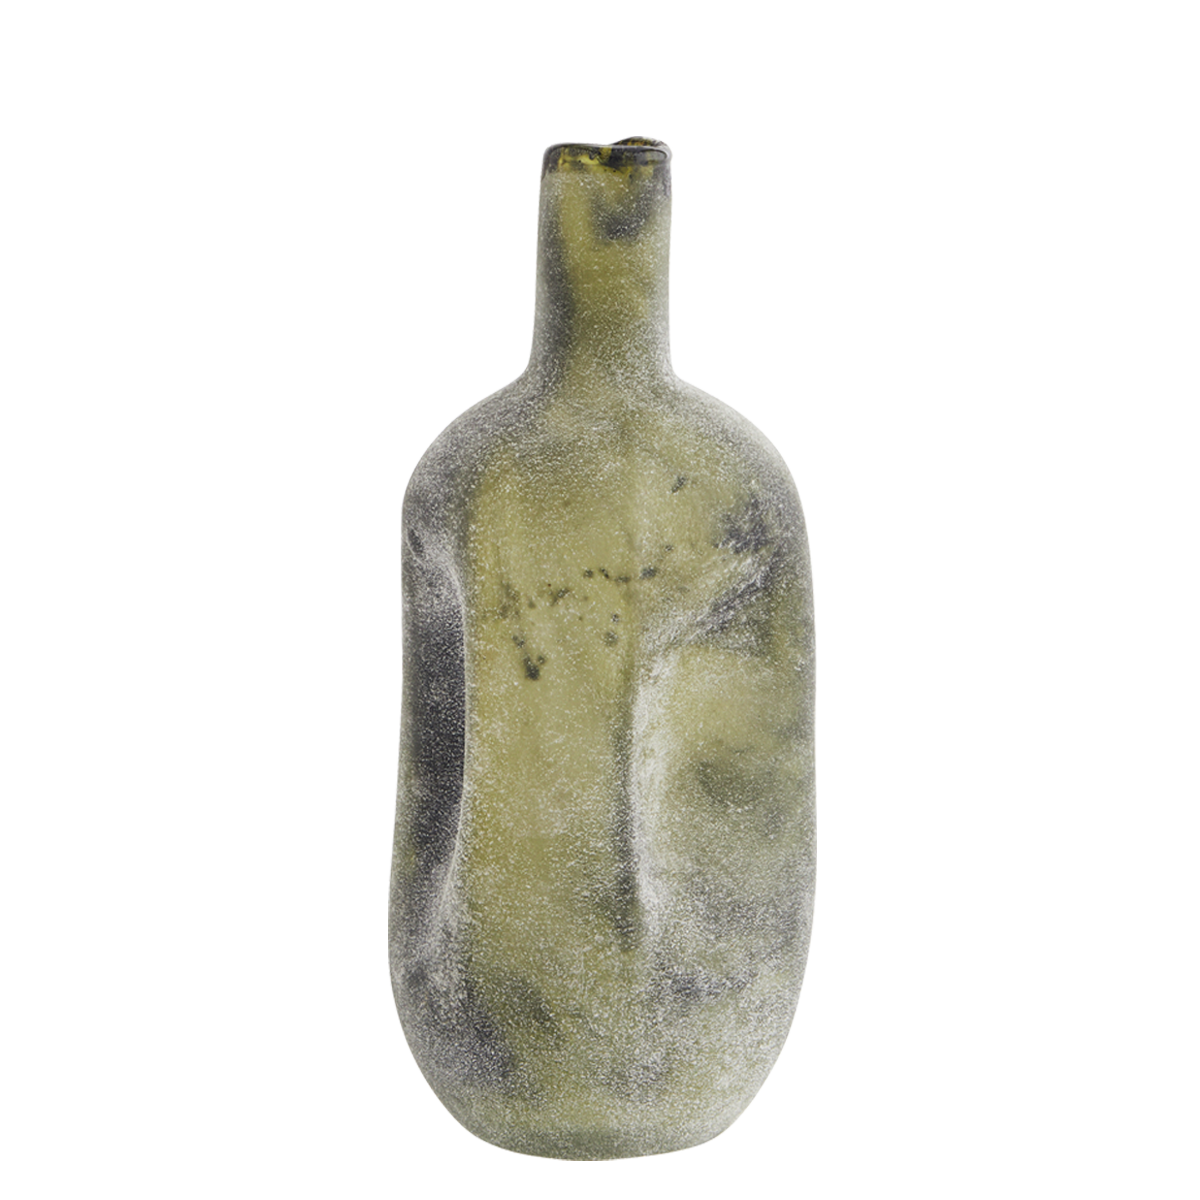 Organic shaped glass vase